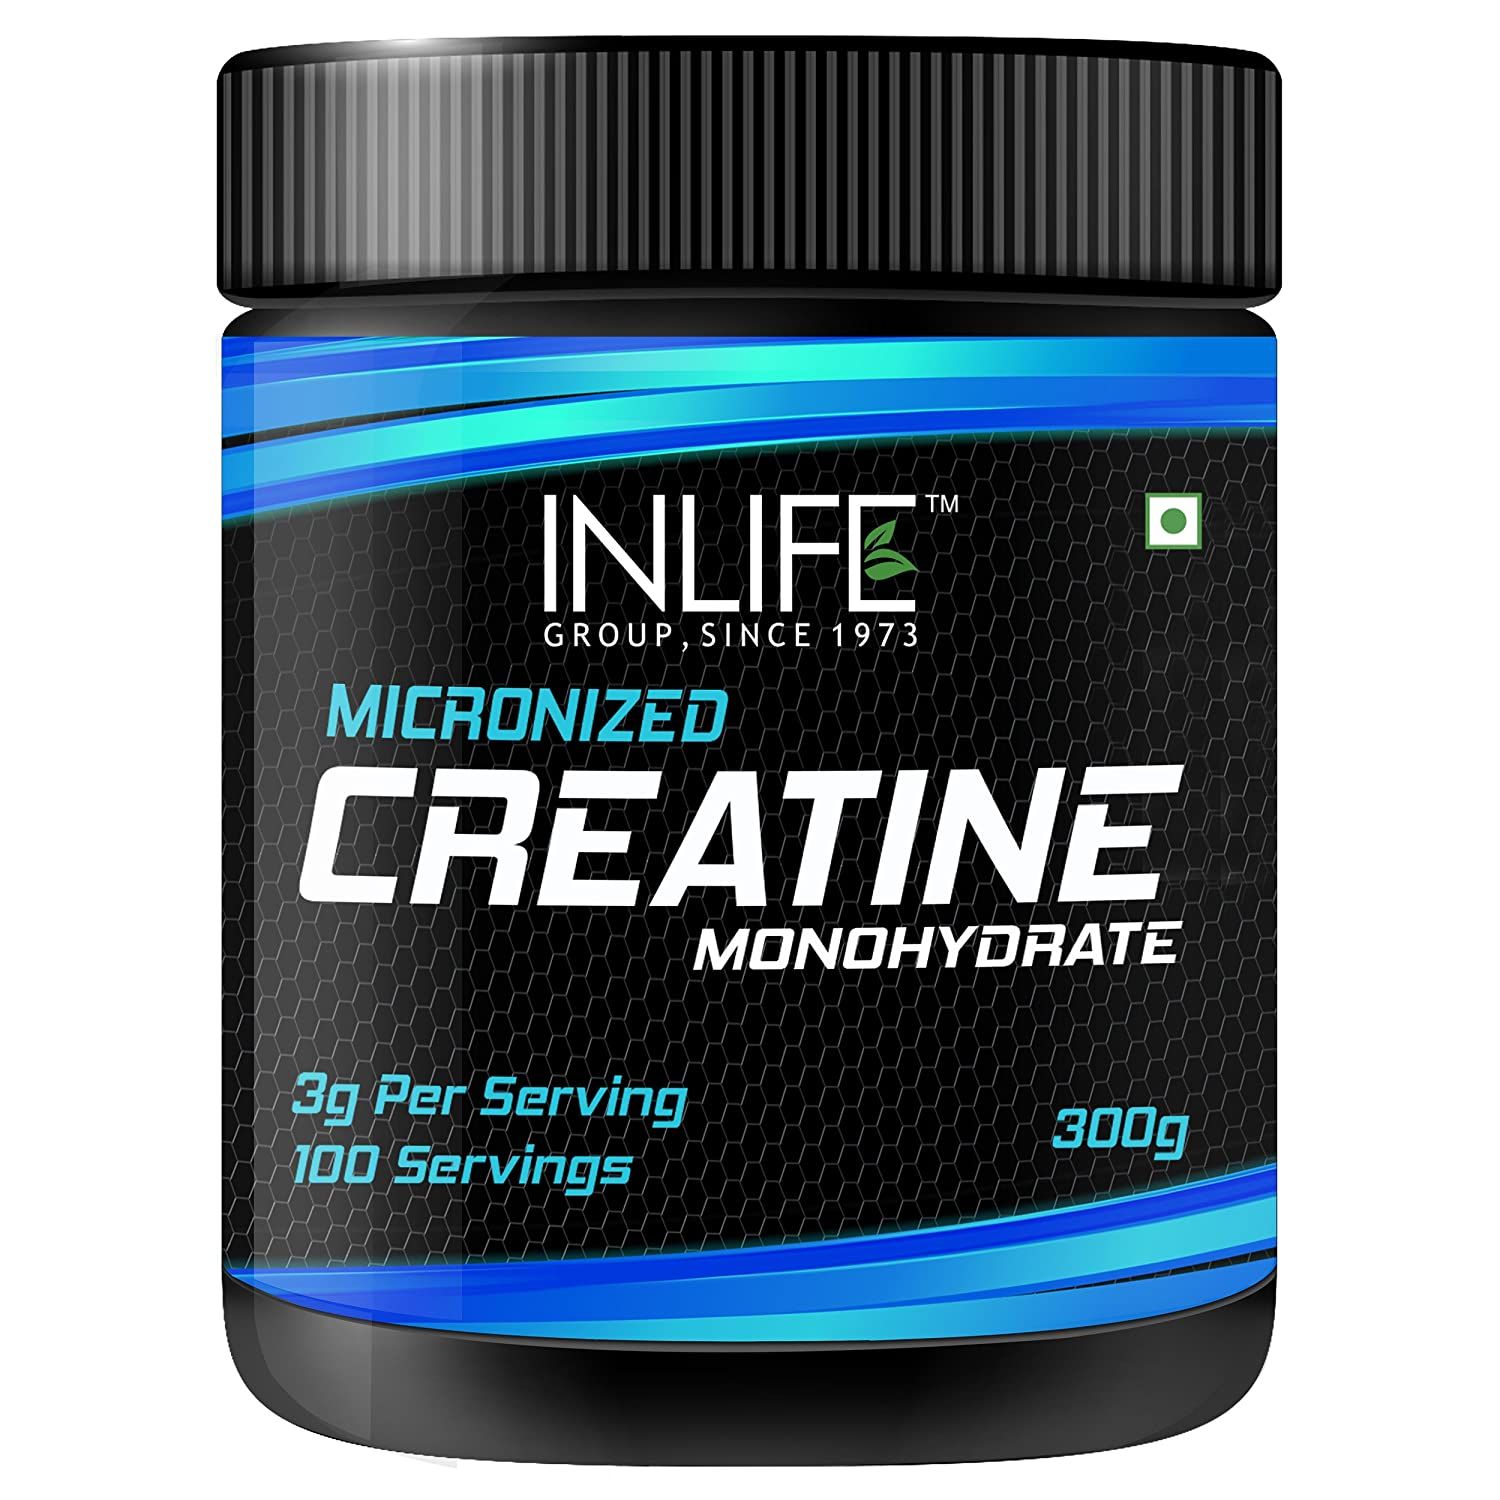 Inlife Micronized Creatine Monohydrate Image